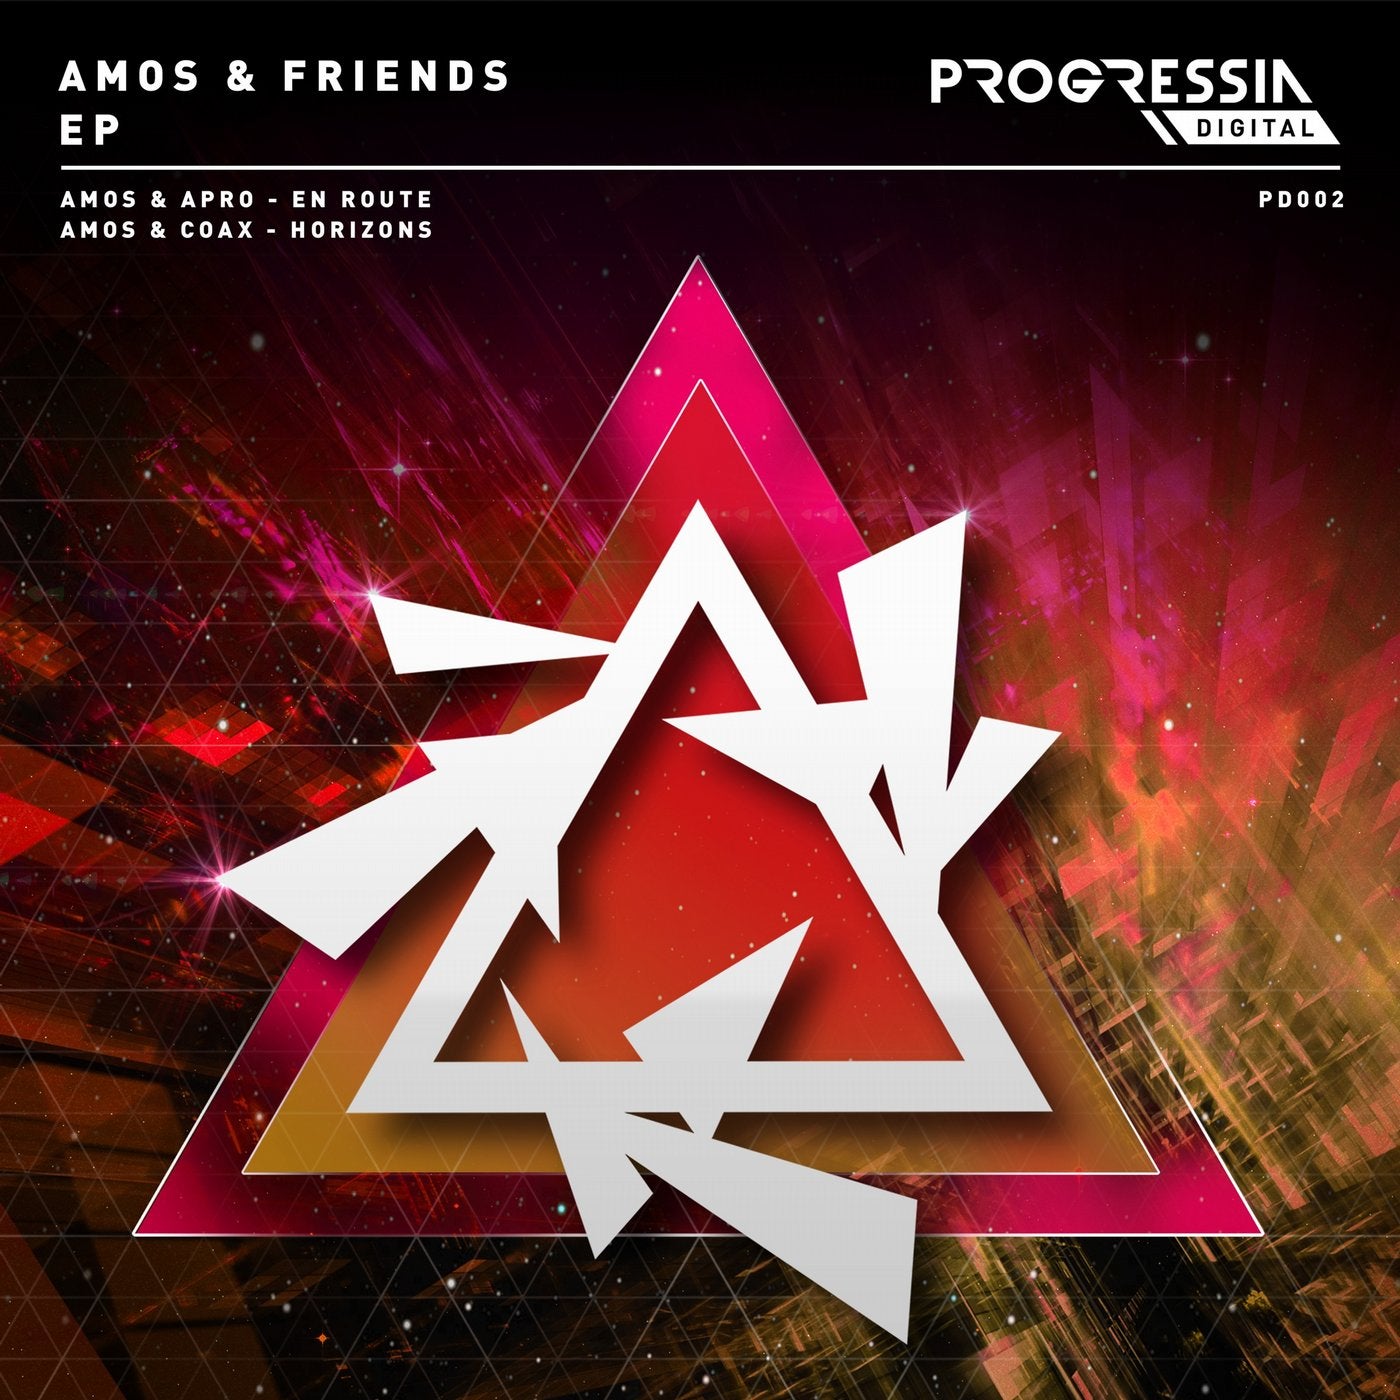 Amos & Friends EP